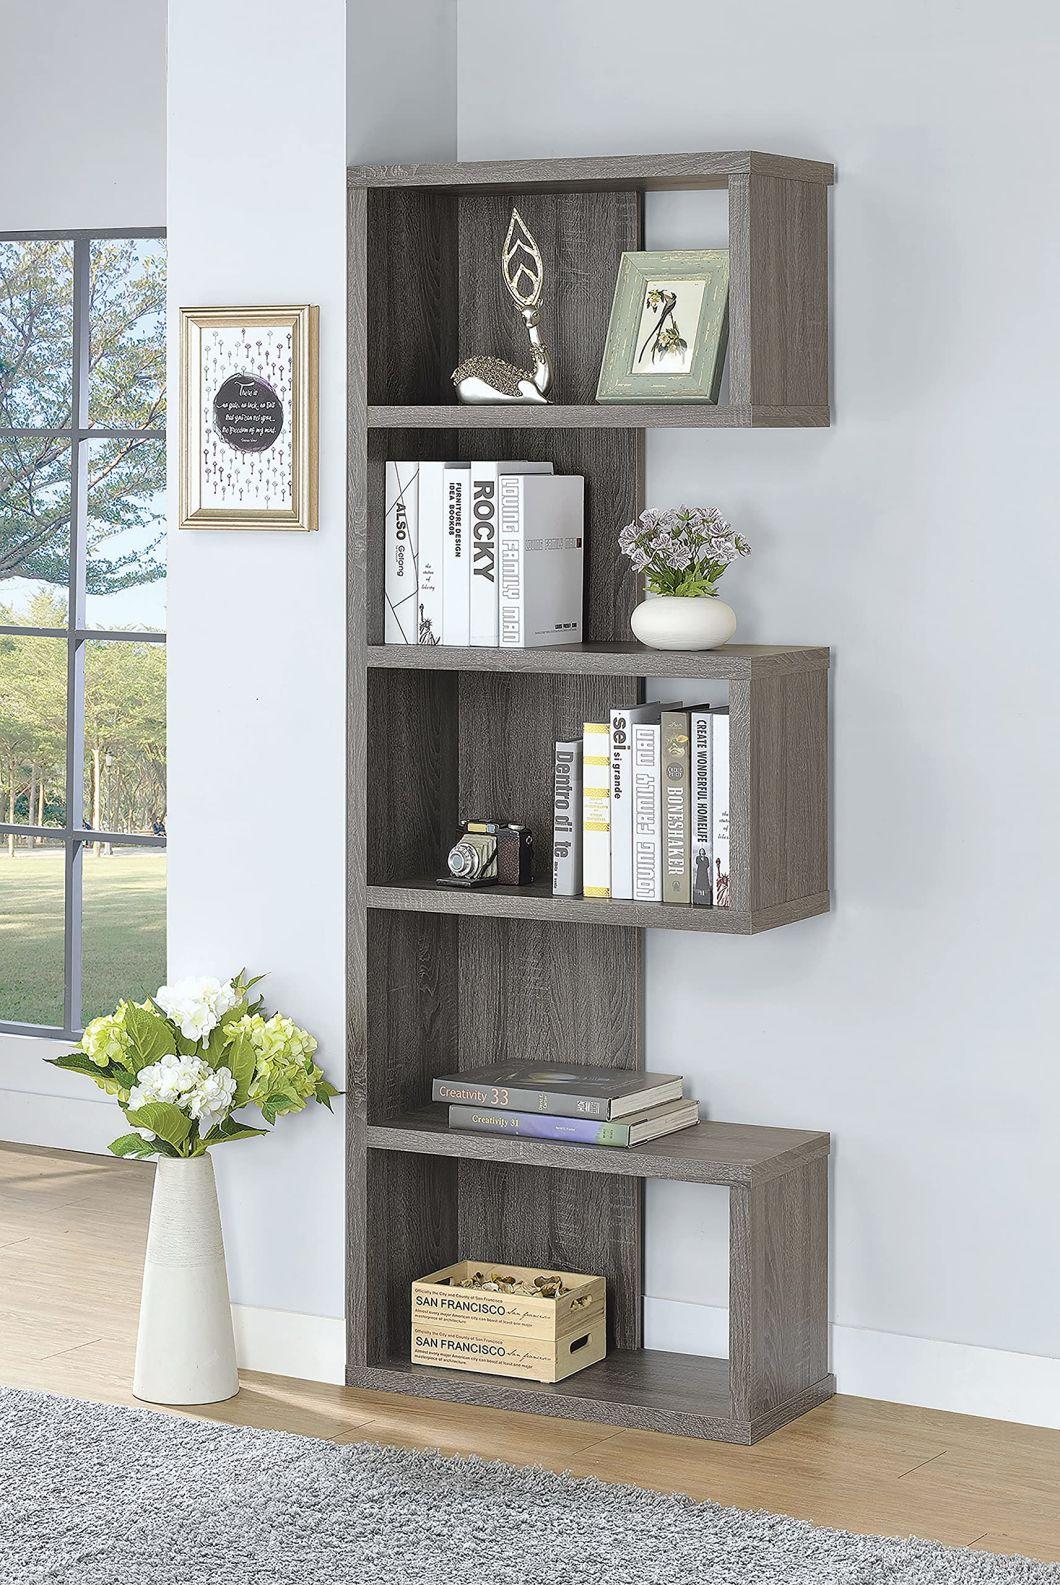 5-Tier Bookcase Storage Shelves Bookshelf